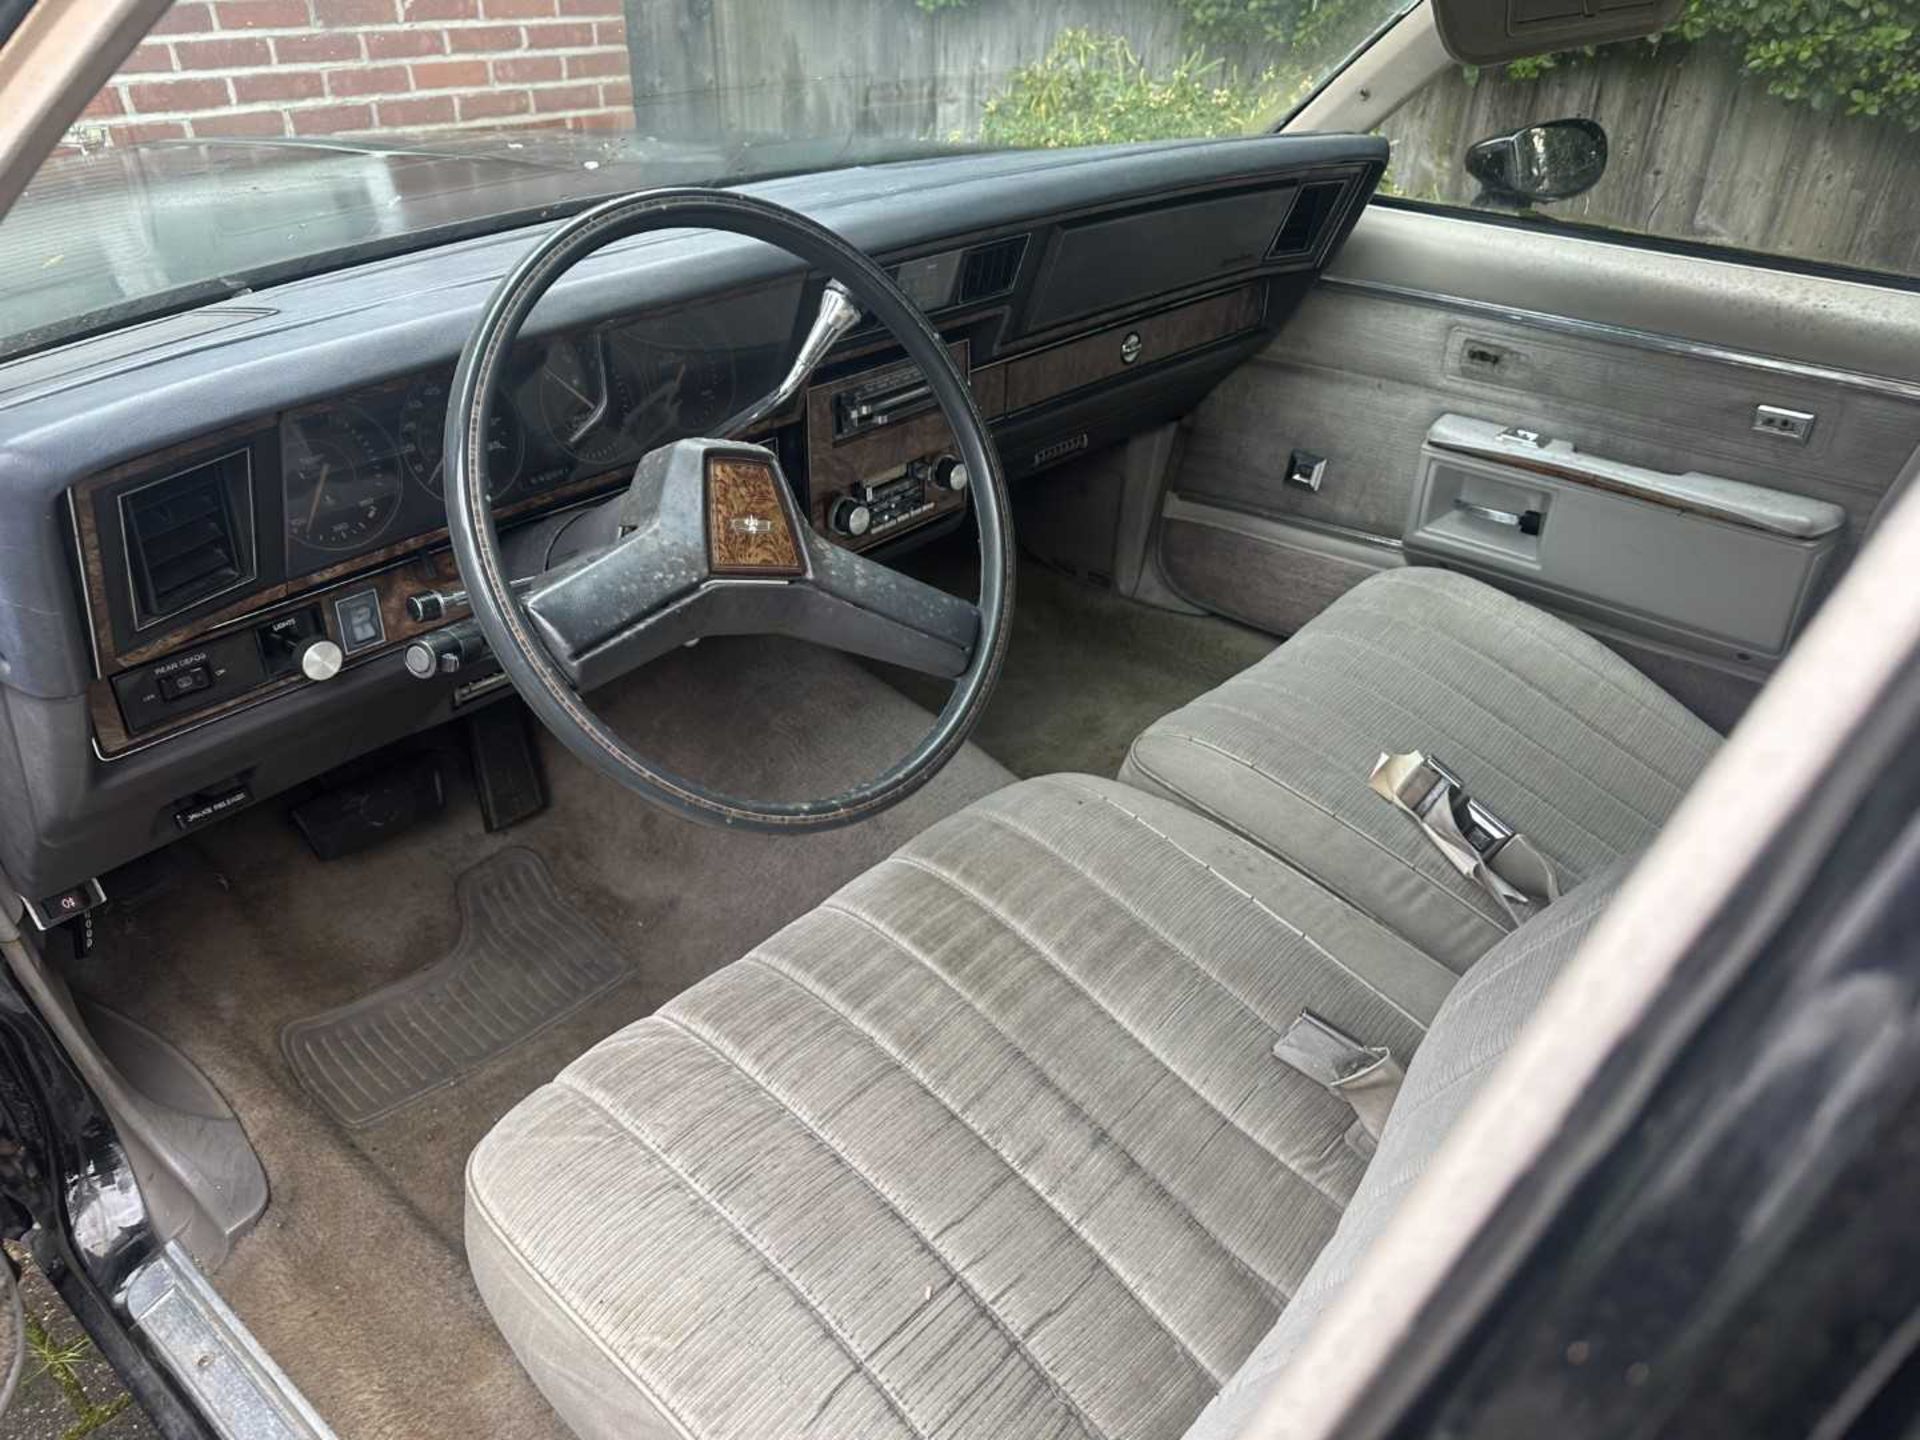 1990 Chevrolet Caprice Station Wagon, 5000cc V8, automatic, reg. no. A134 VYE - Image 12 of 14